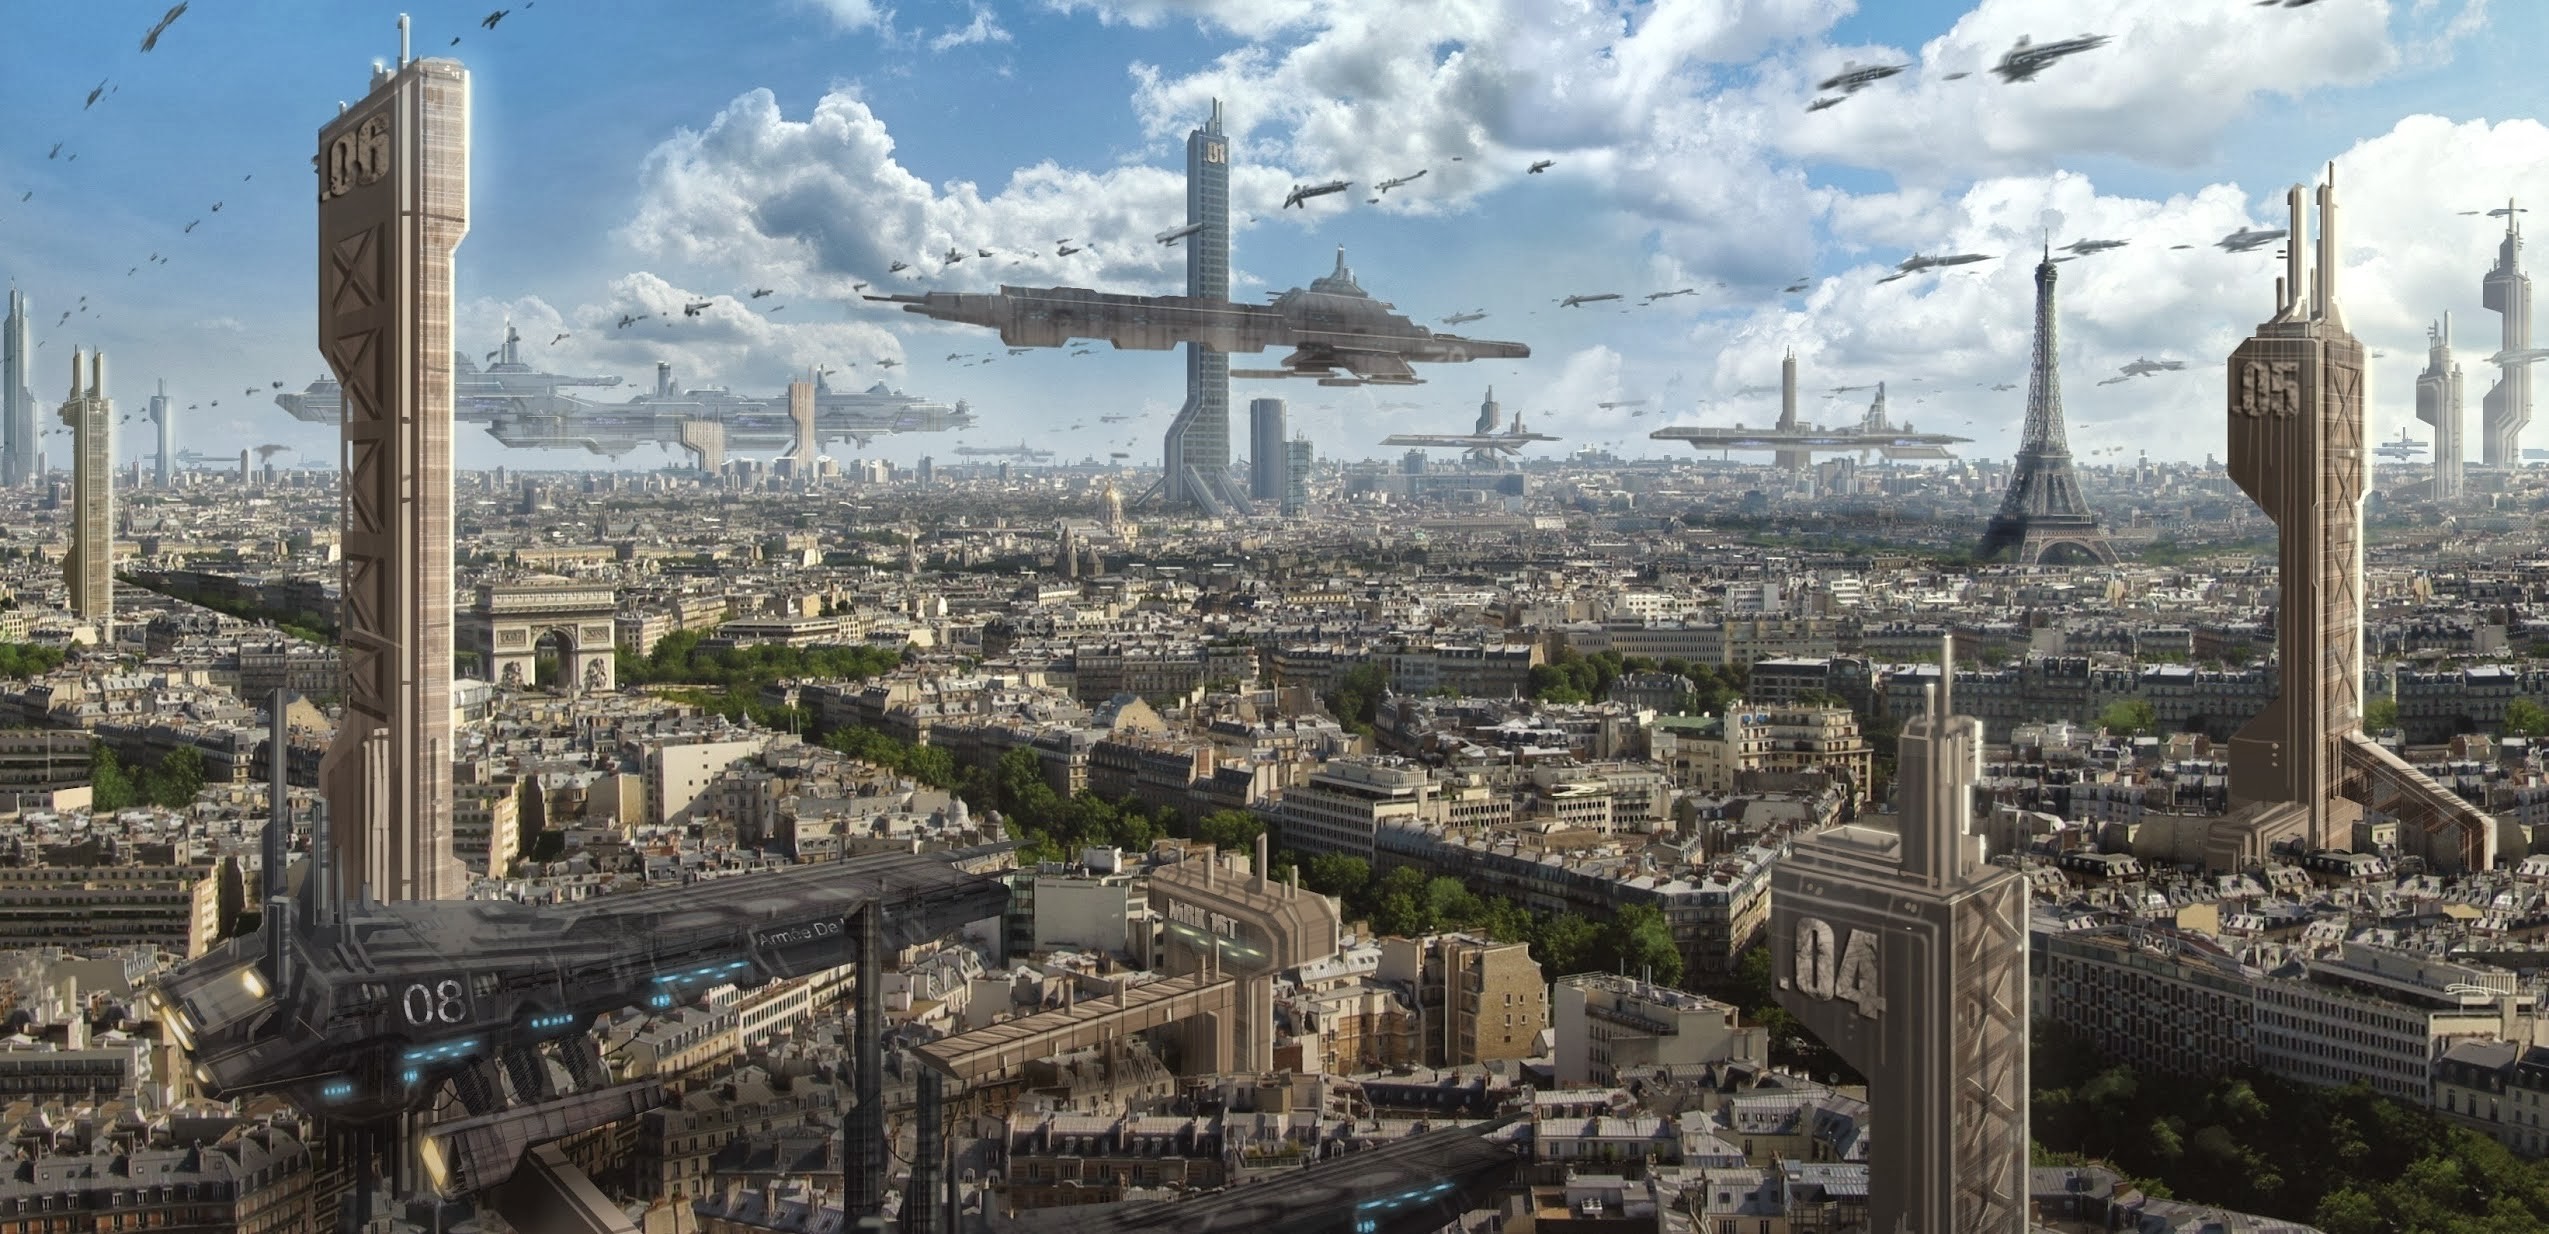 General 2549x1234 cityscape futuristic science fiction futuristic city Paris France Arc de Triomphe Eiffel Tower airships vehicle digital art